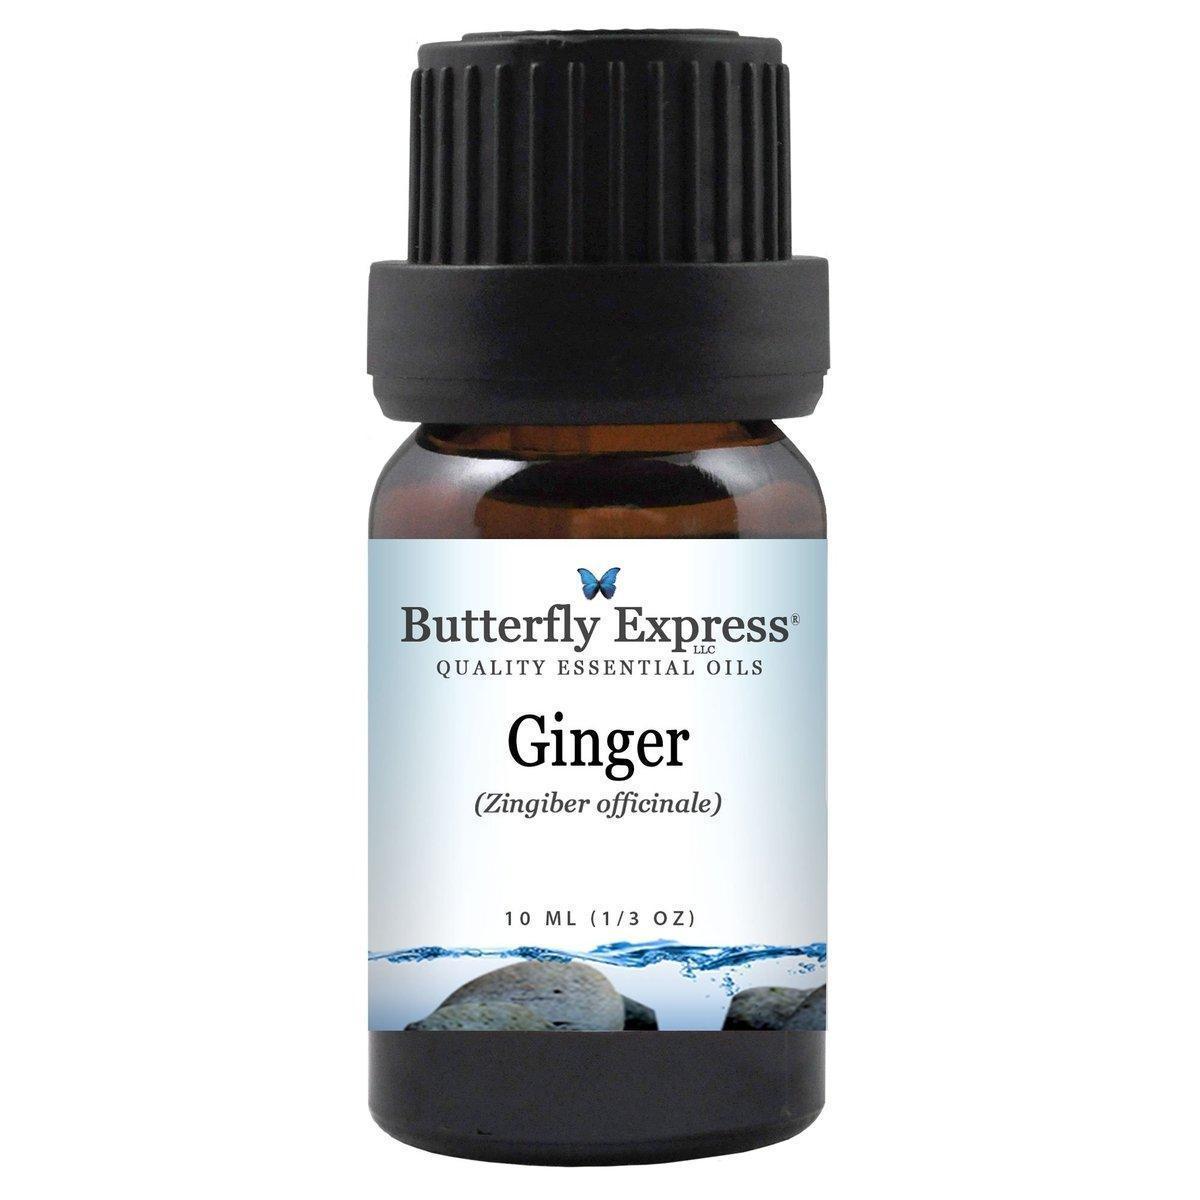 Ginger essential oils